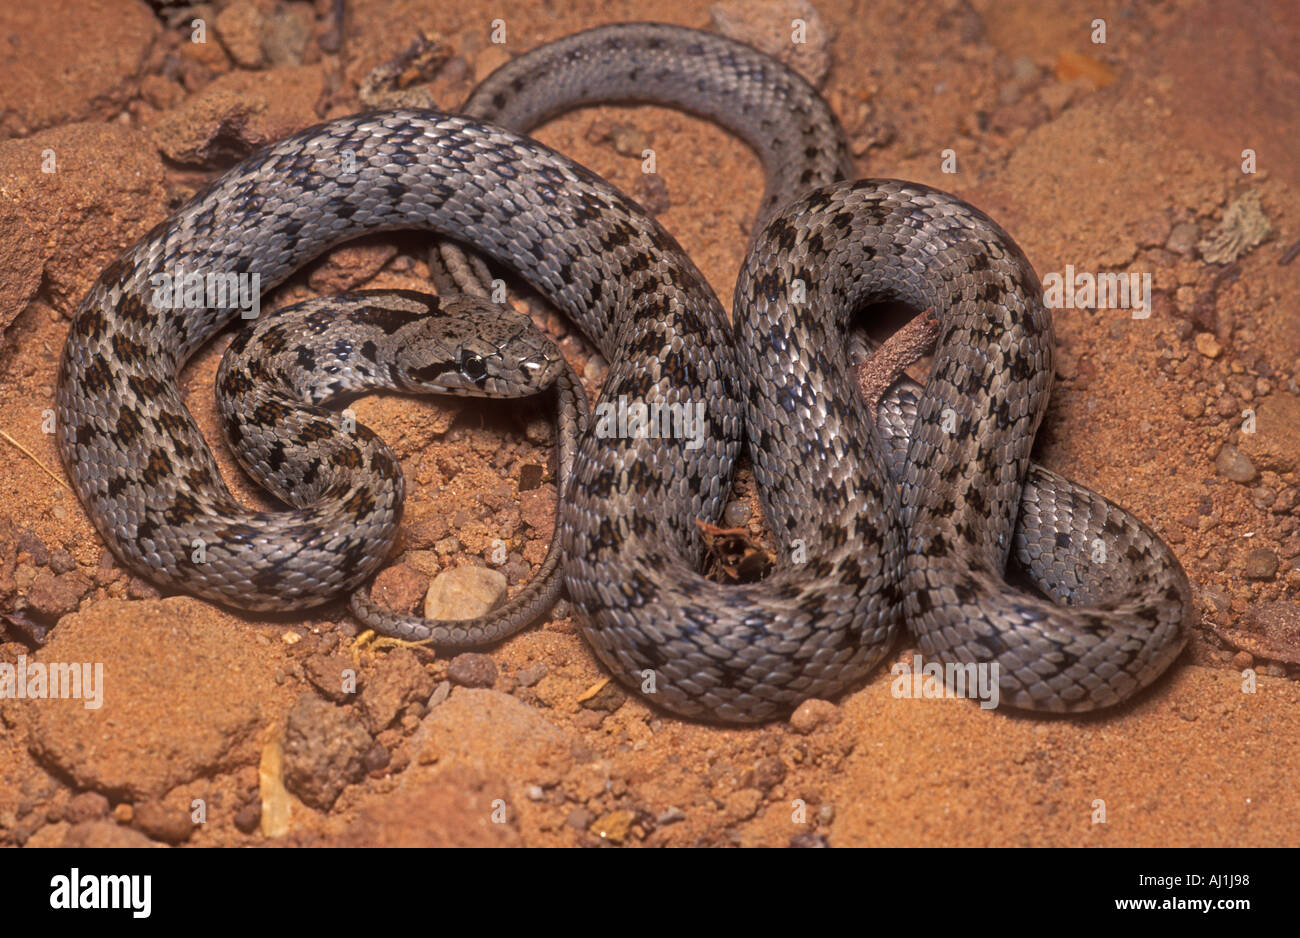 Transcaucasian rat snake Zamenis hohenackeri from the Middle East Stock Photo